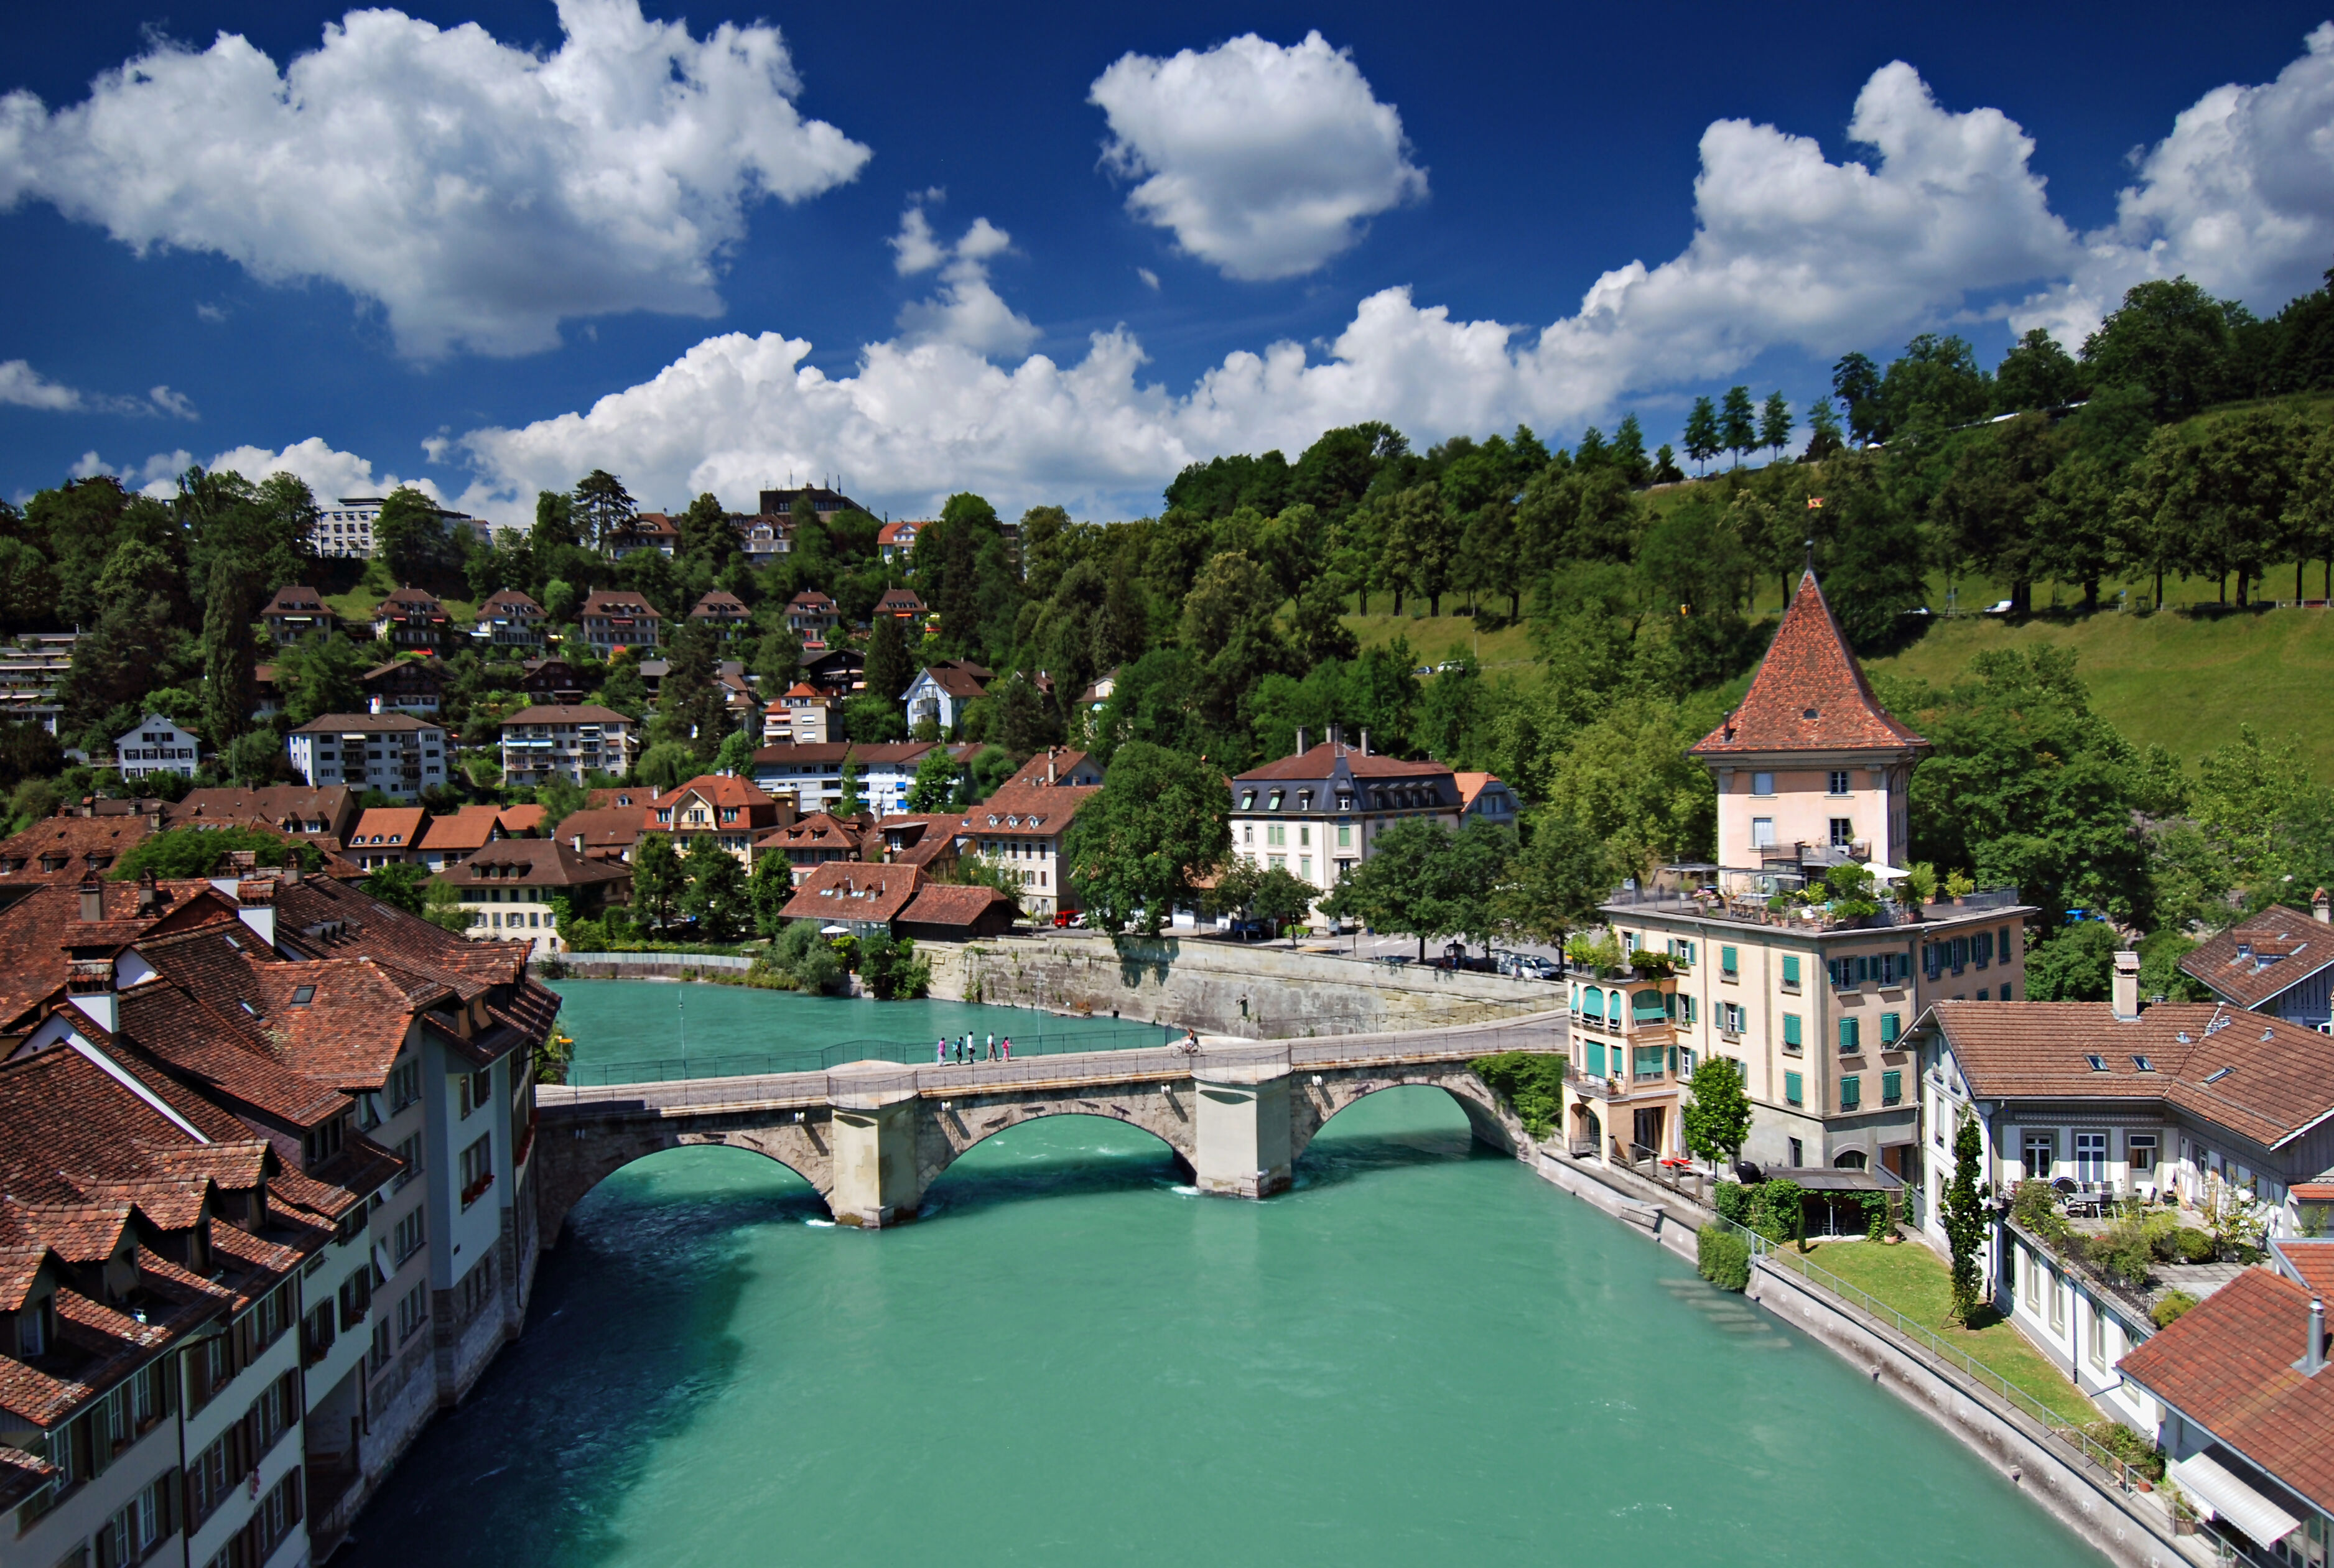 Discover Switzerland, Austria & Bavaria